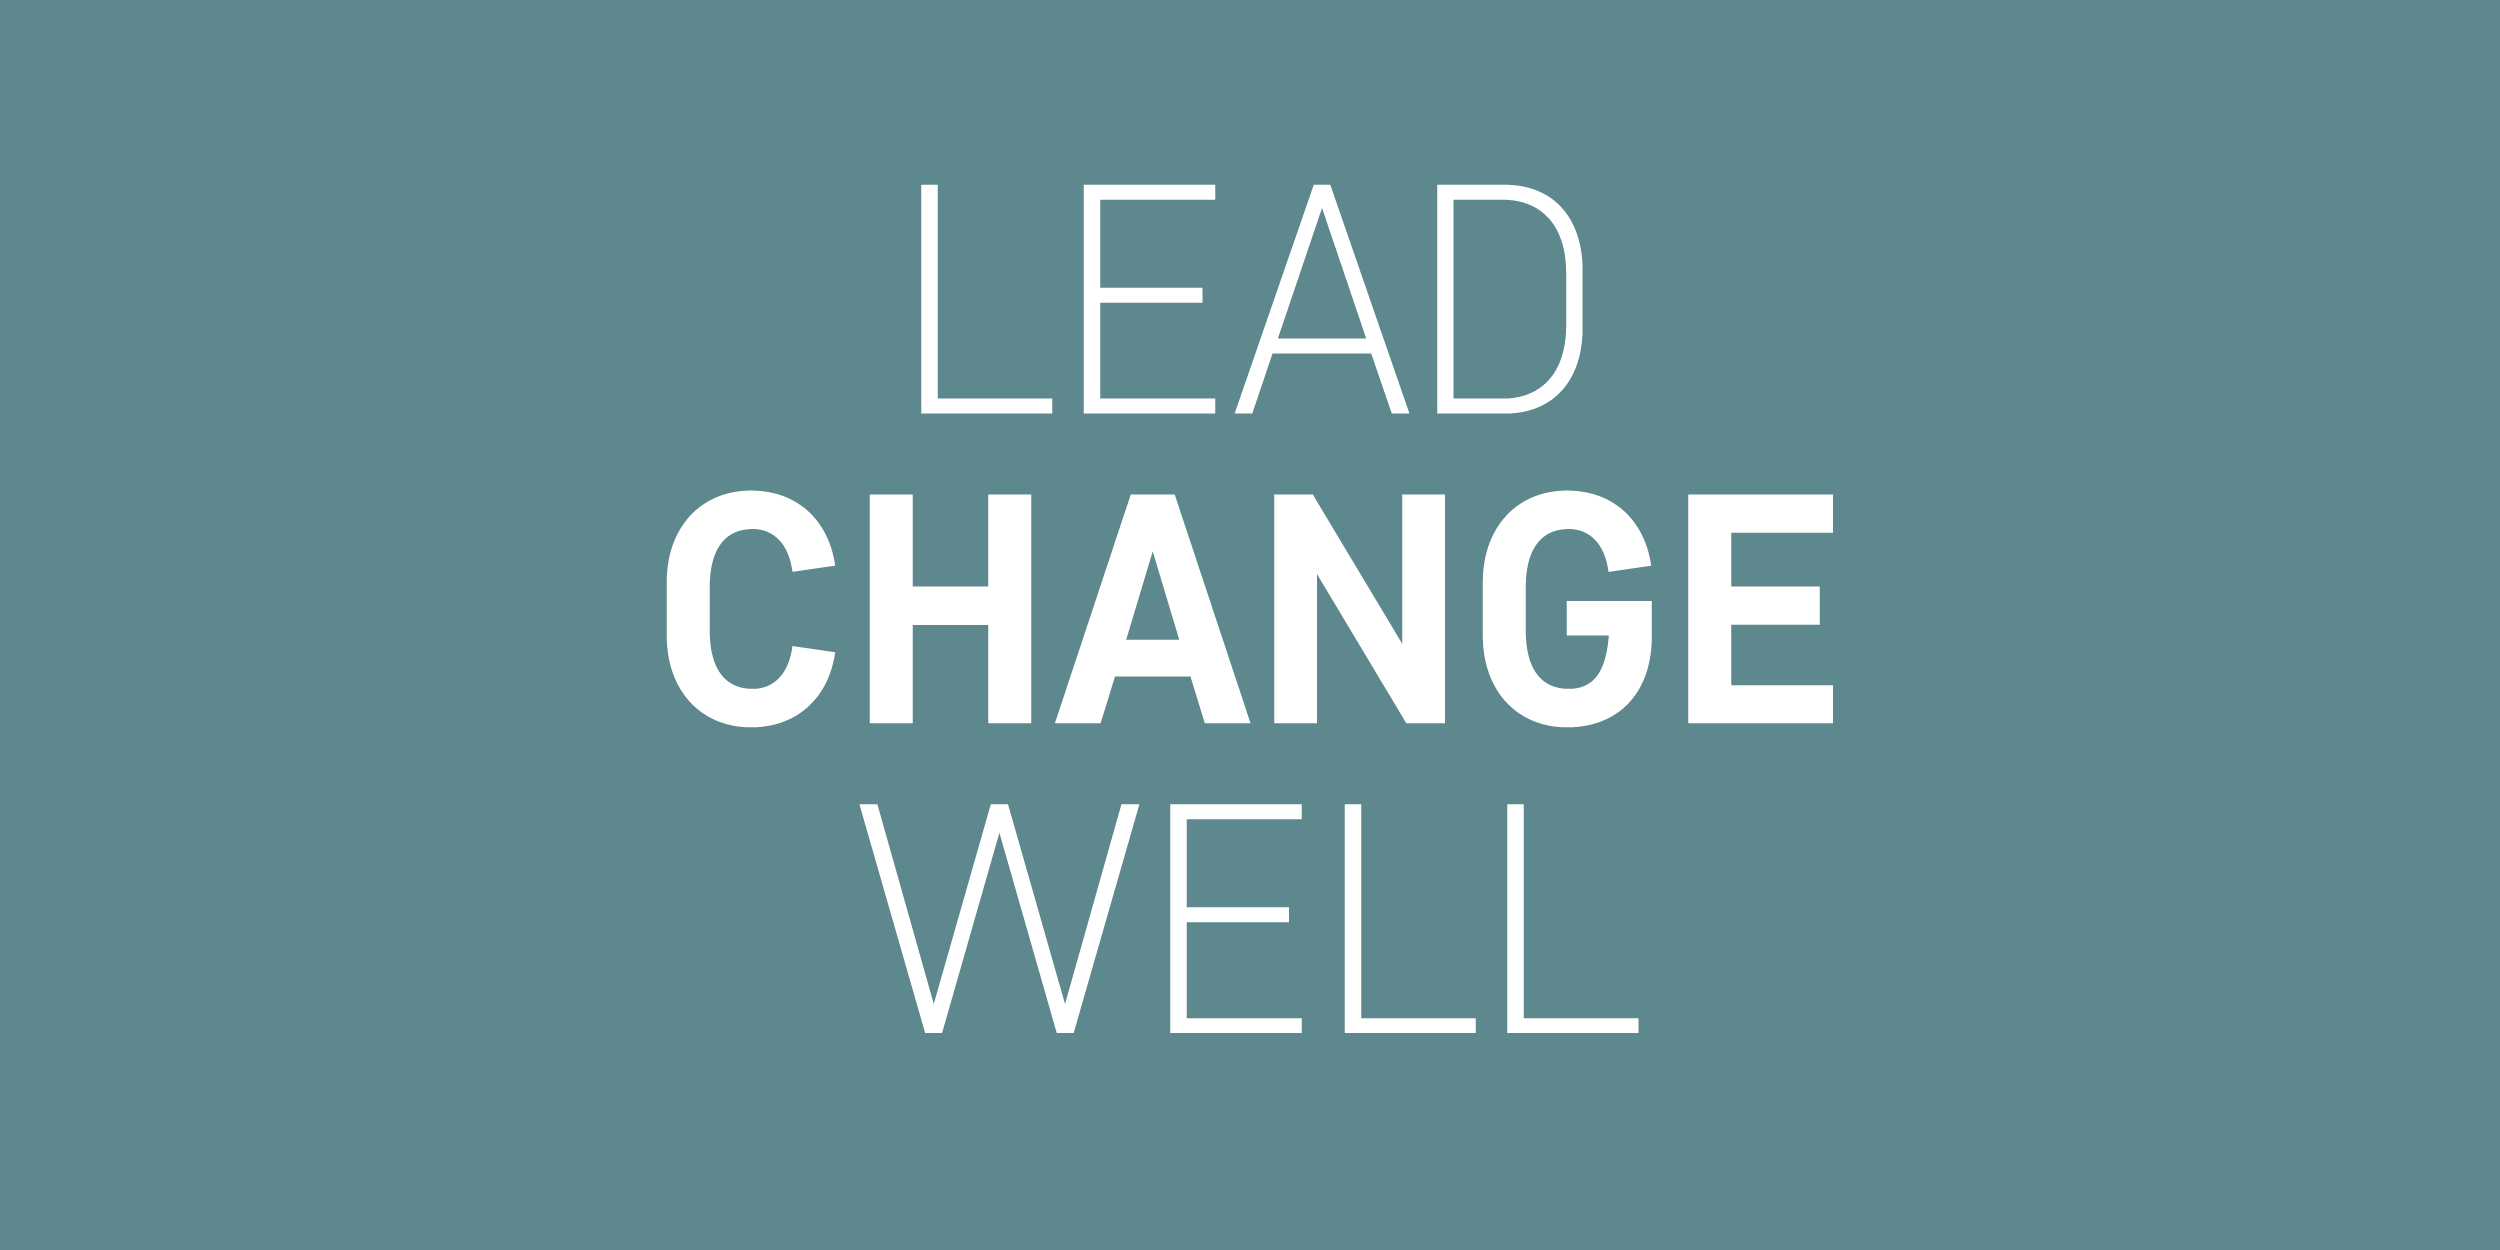 Lead Change Well.